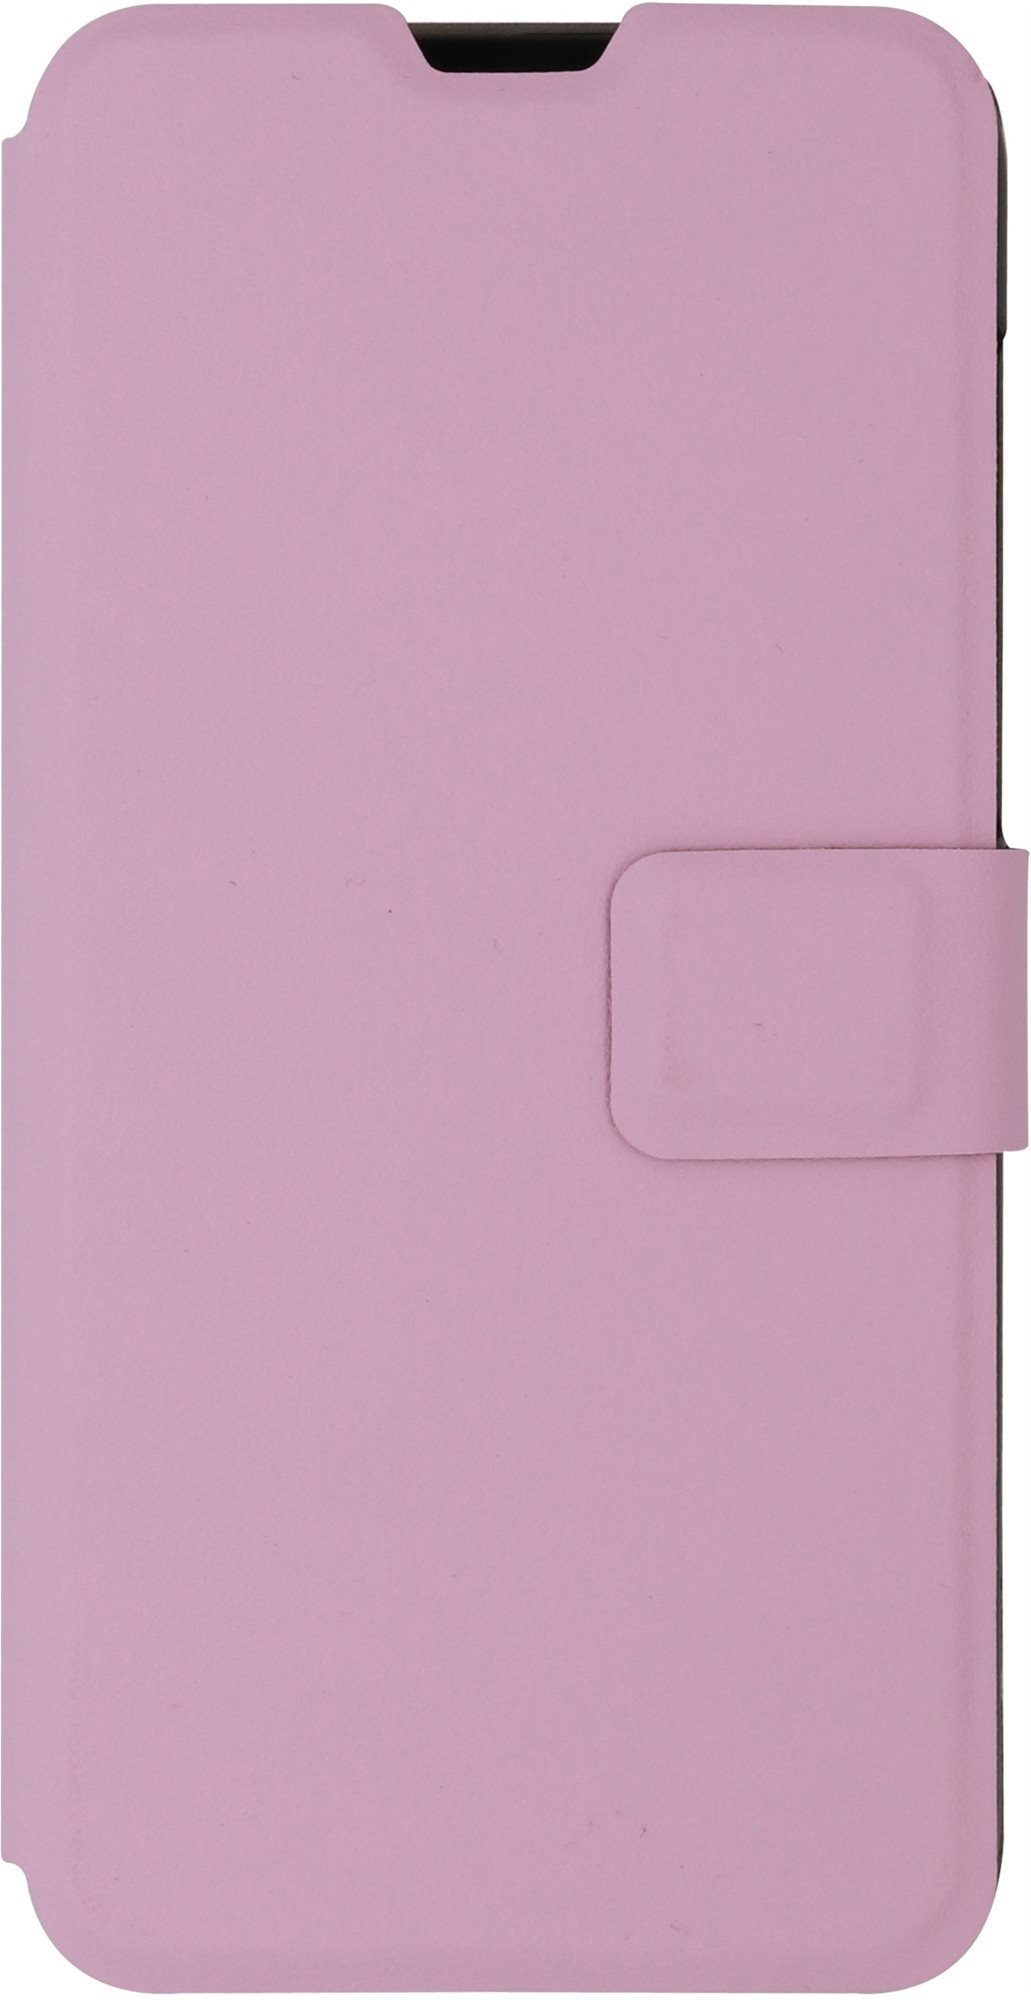 Mobiltelefon tok iWill Book PU Leather HUAWEI Y5 (2019) / Honor 8S rózsaszín tok